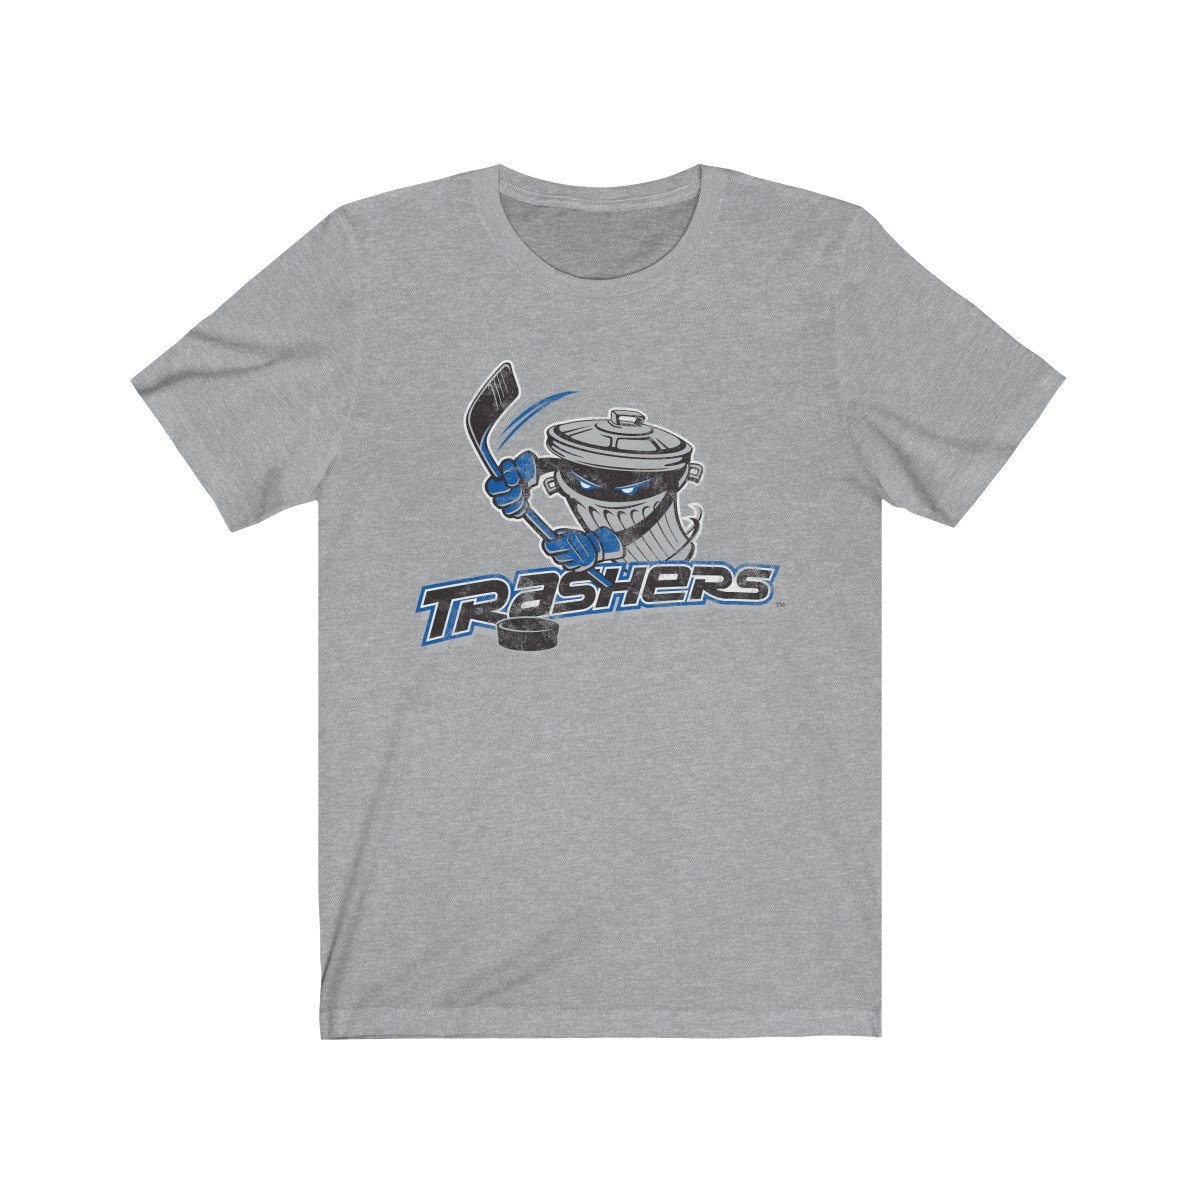 Danbury Trashers Hockey T-shirt Defunct Hockey Team UHL -  Norway